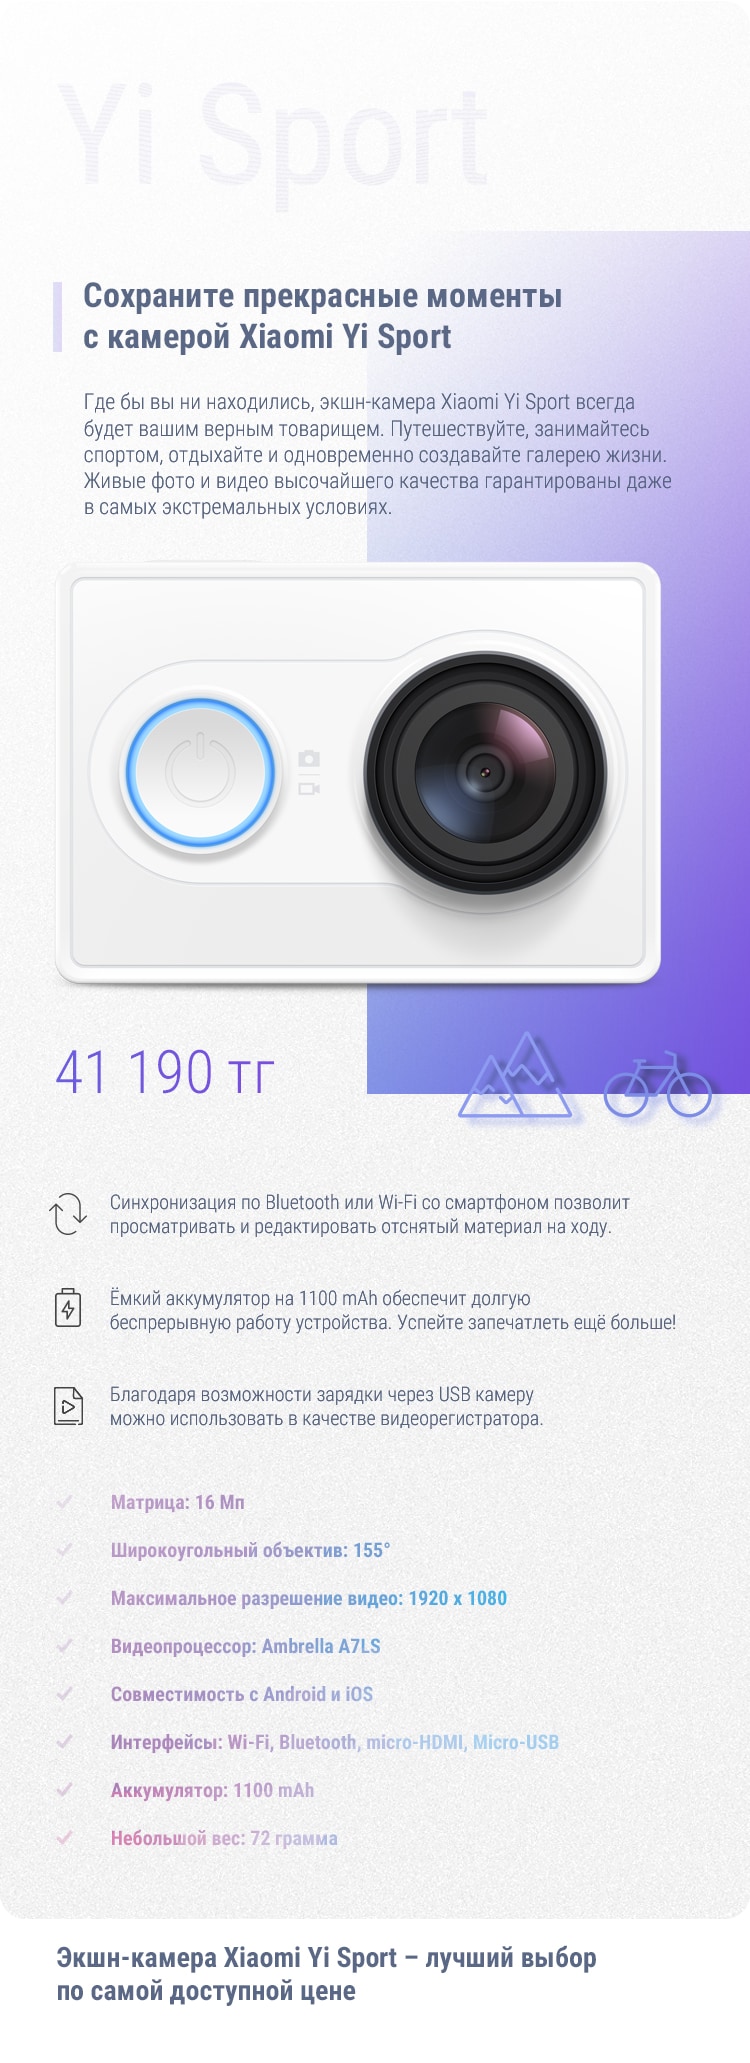 Экшн-камеры Xiaomi Yi Sport